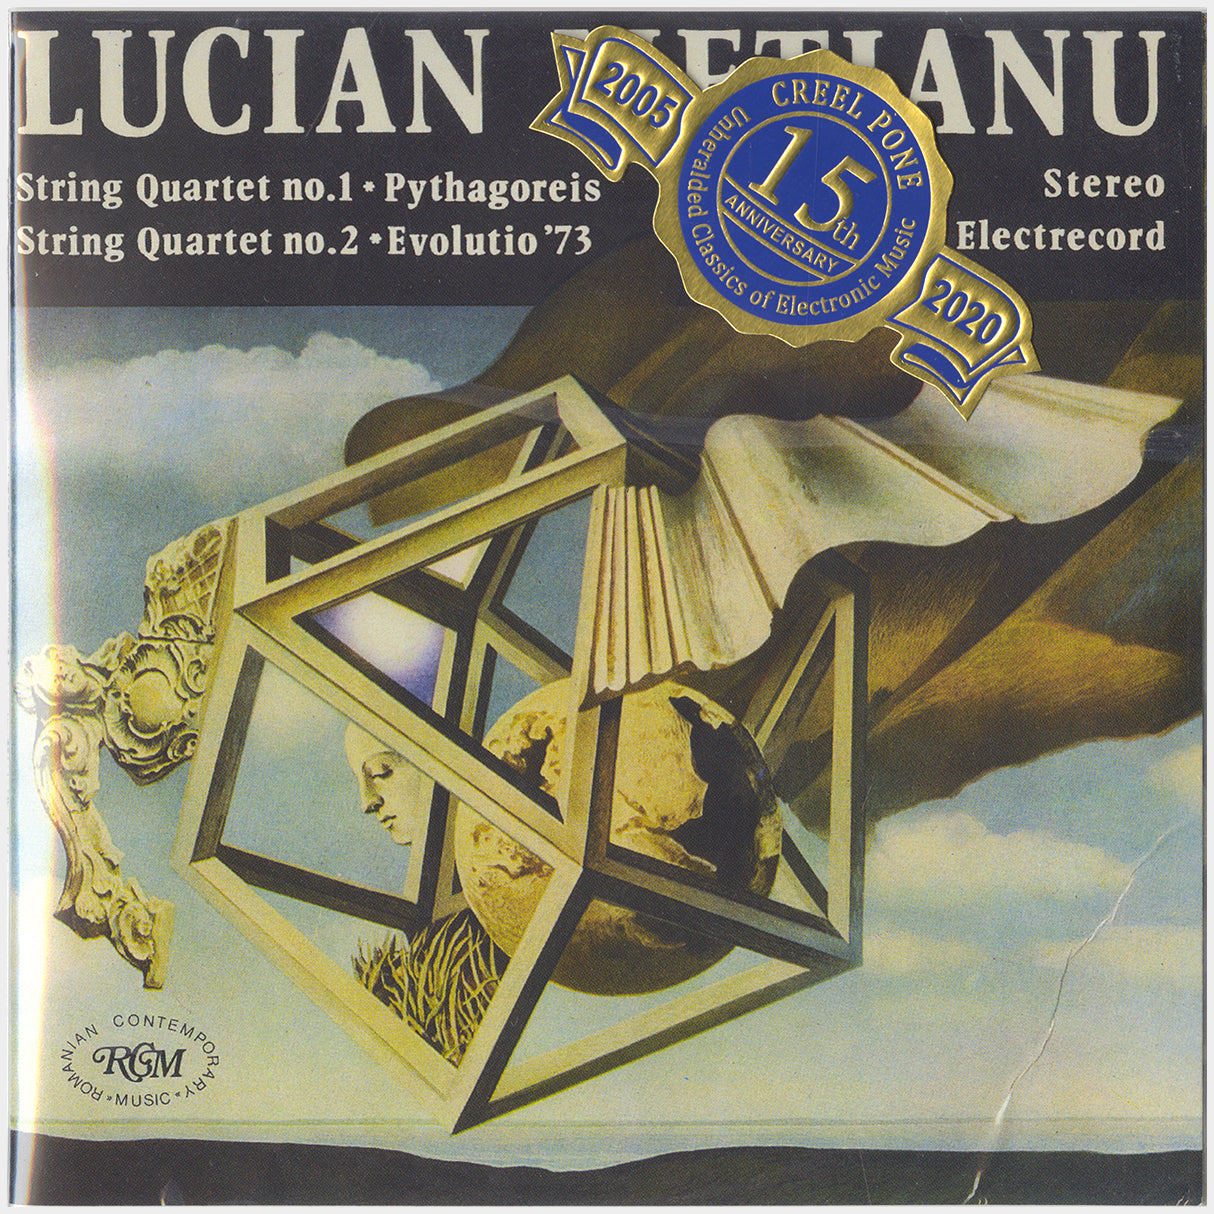 [CP 236 CD] Lucian Mețianu, Silvio Foretic, Janko Jezovšek; String Quartet Nos. 1 & 2, Pythagoreis, Evolutio '73,  Balkanal